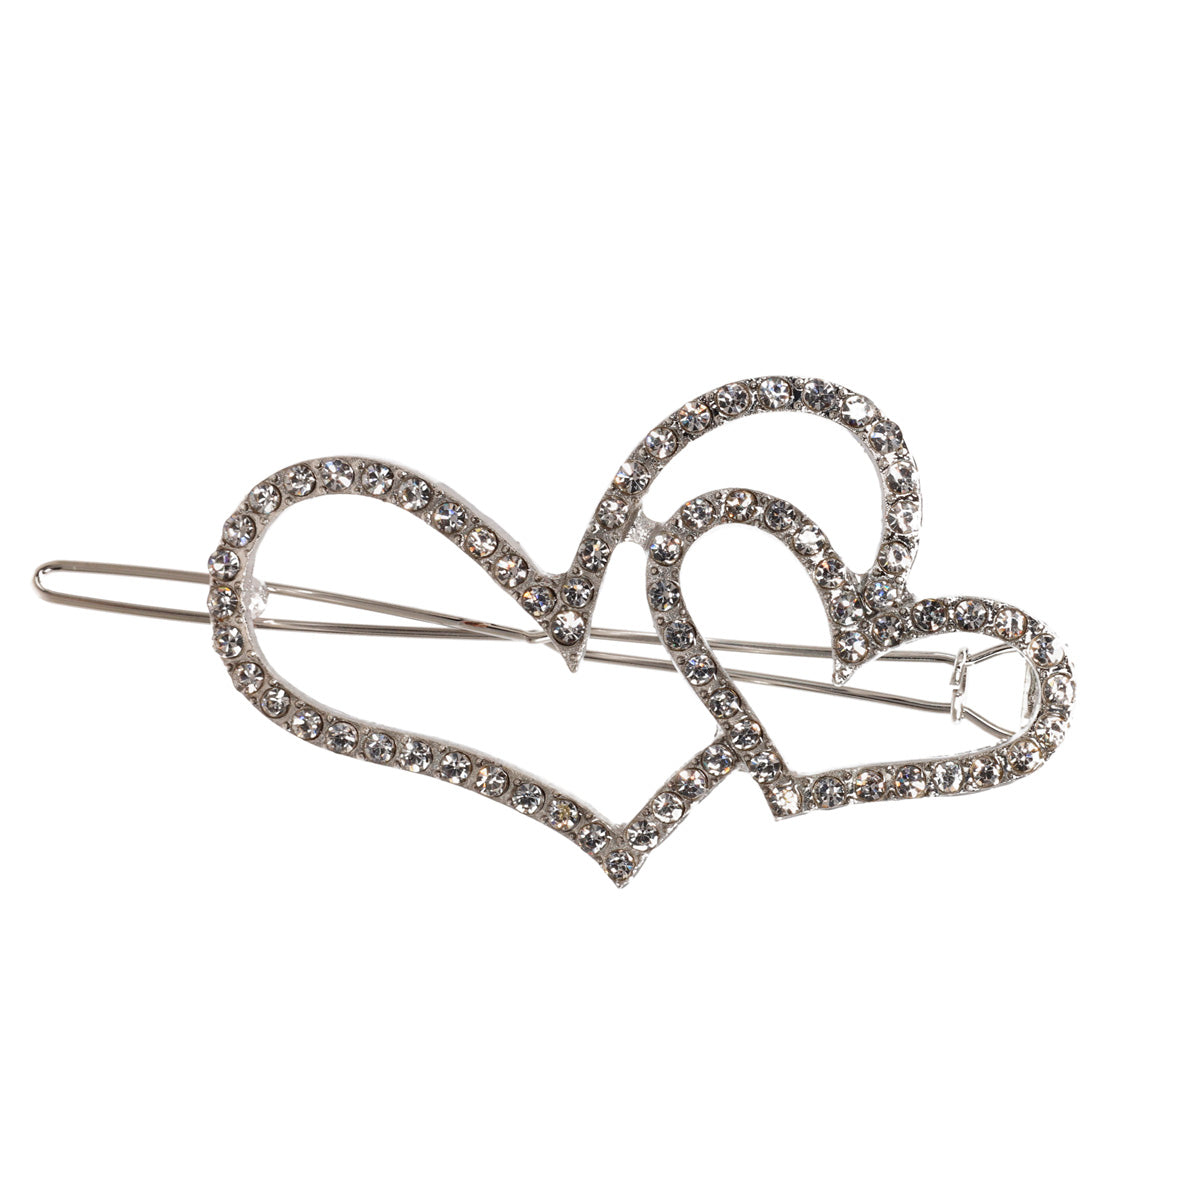 Rhinestone heart hair buckle 6,6cm 1pcs